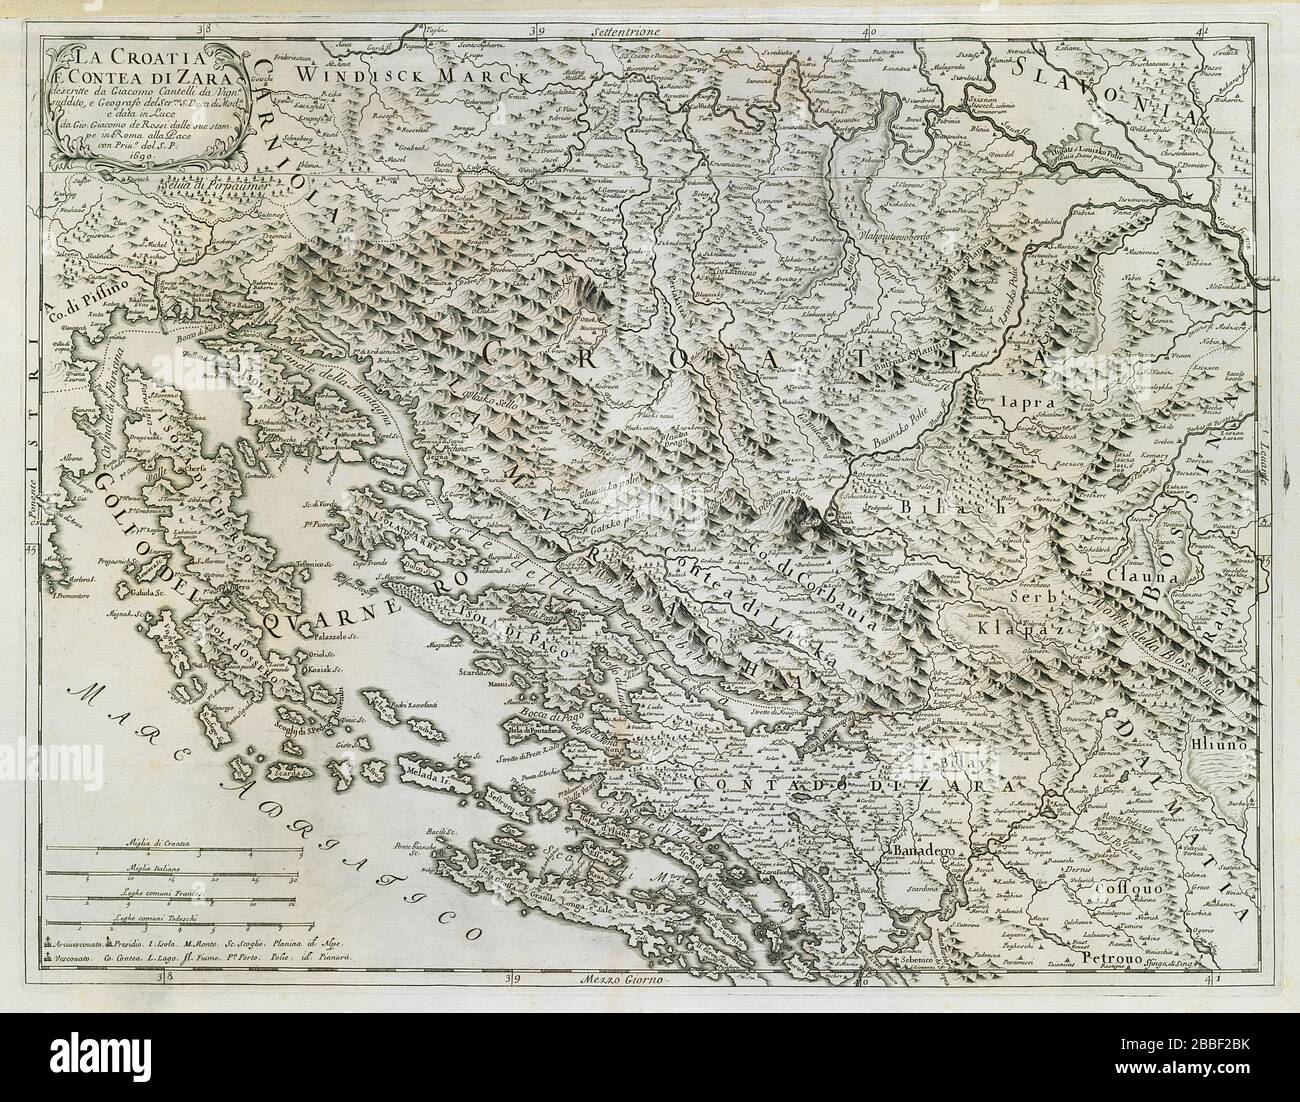 La Croatia e Contea di Zara. Kvarner Dalmatia Zadar. ROSSI / CANTELLI 1690  map Stock Photo - Alamy